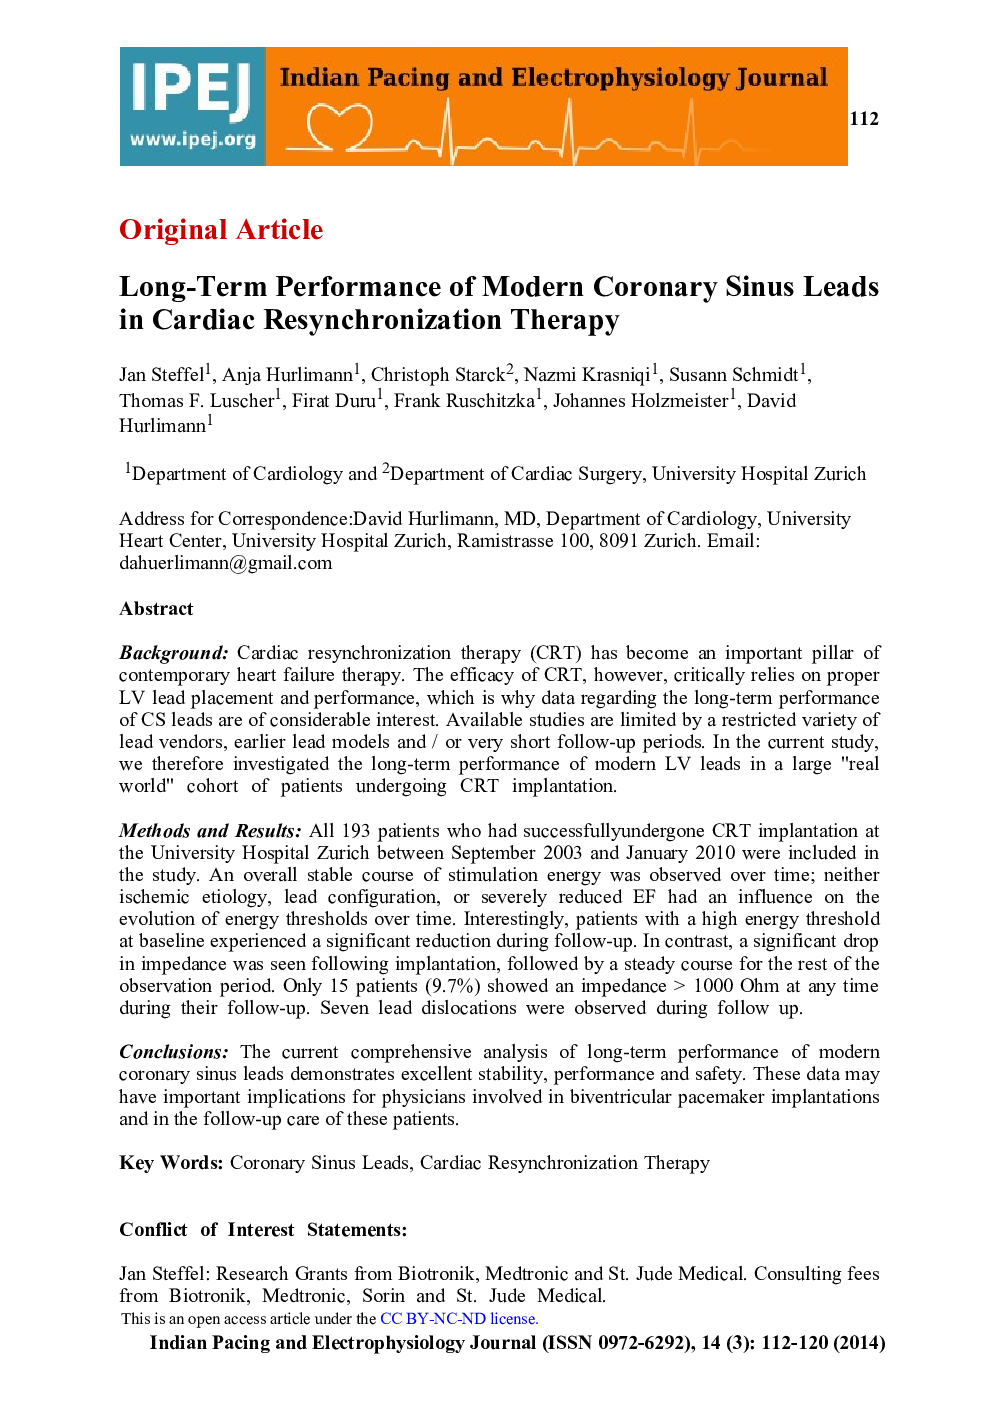 Long-Term Performance of Modern Coronary Sinus Leads in Cardiac Resynchronization Therapy